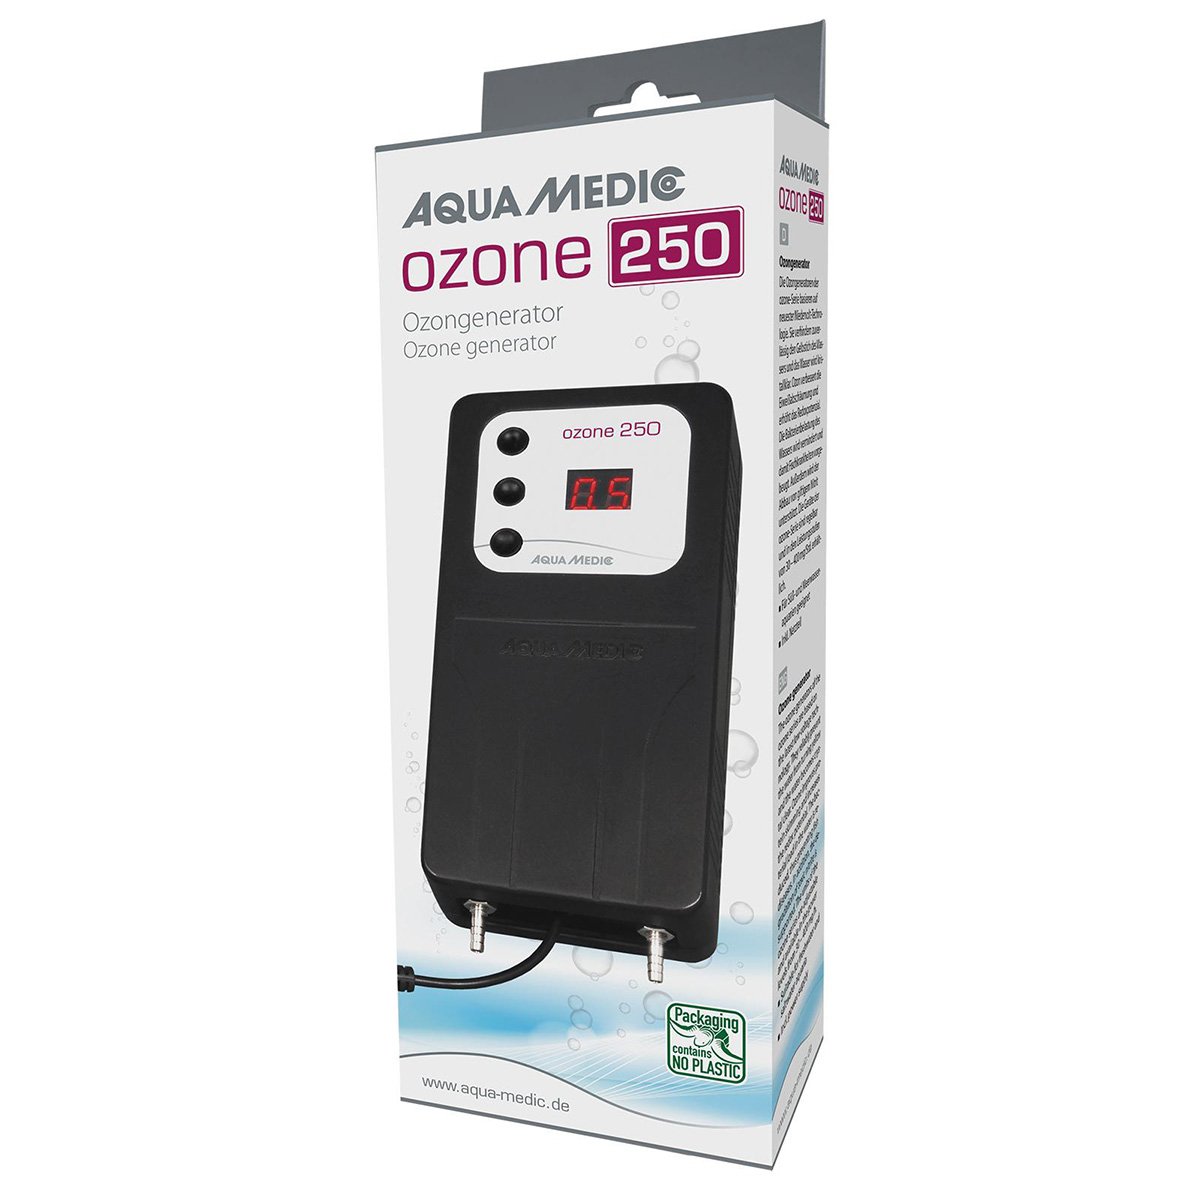 Aqua Medic Ozone 250 von Aqua Medic